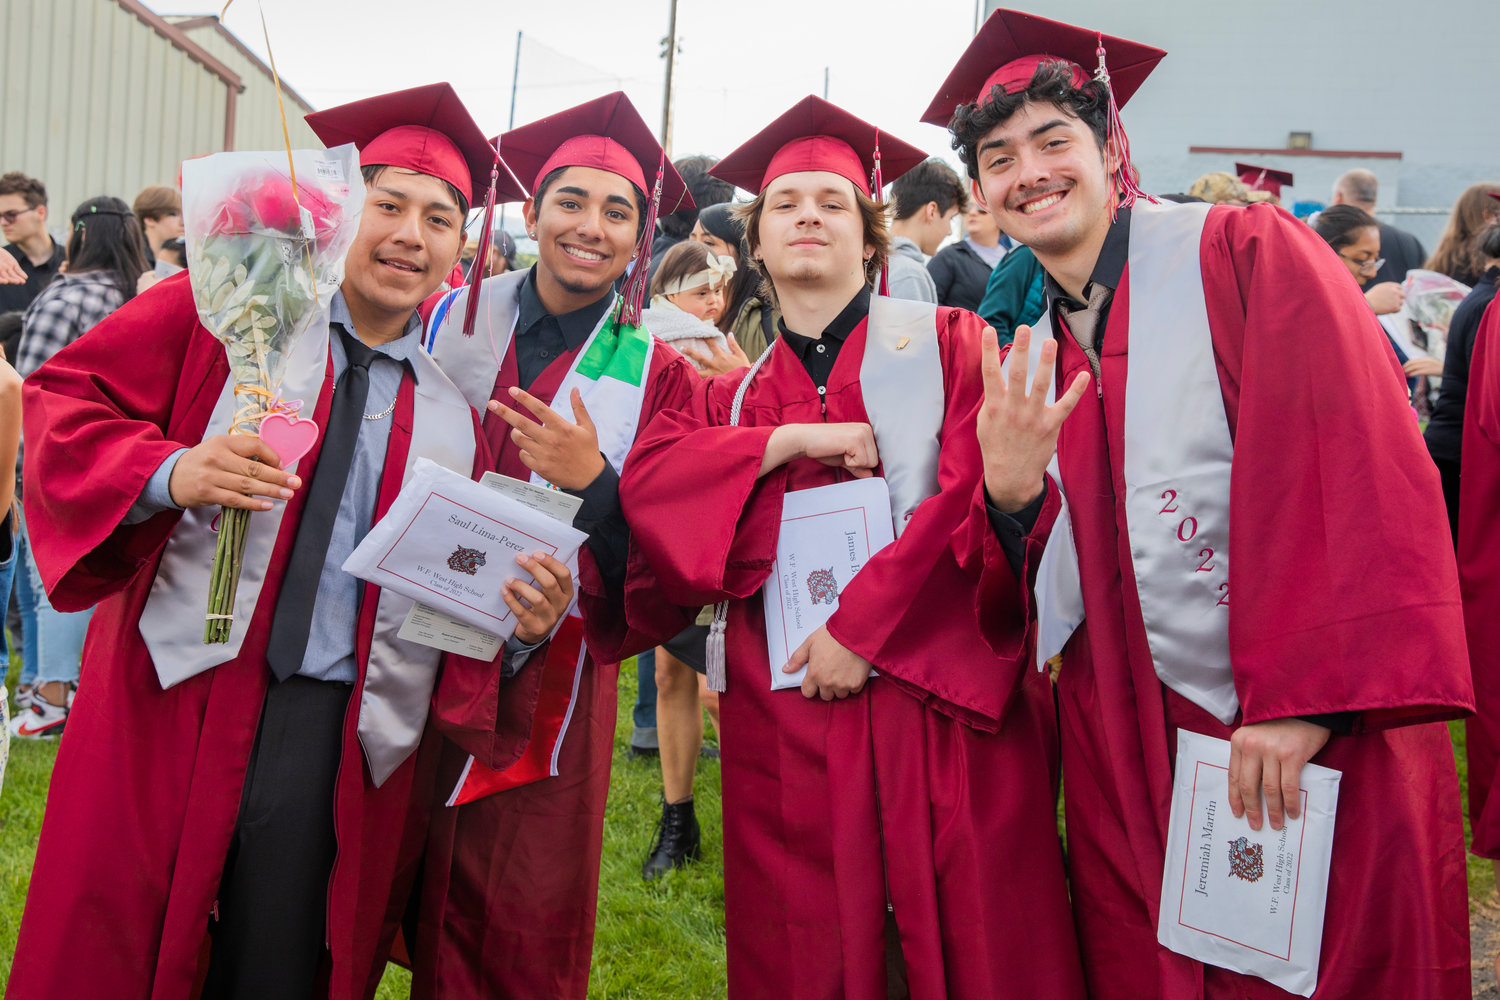 Graduates pose for a photo with their diplomas at Bearcat Stadium Saturday in Chehalis.